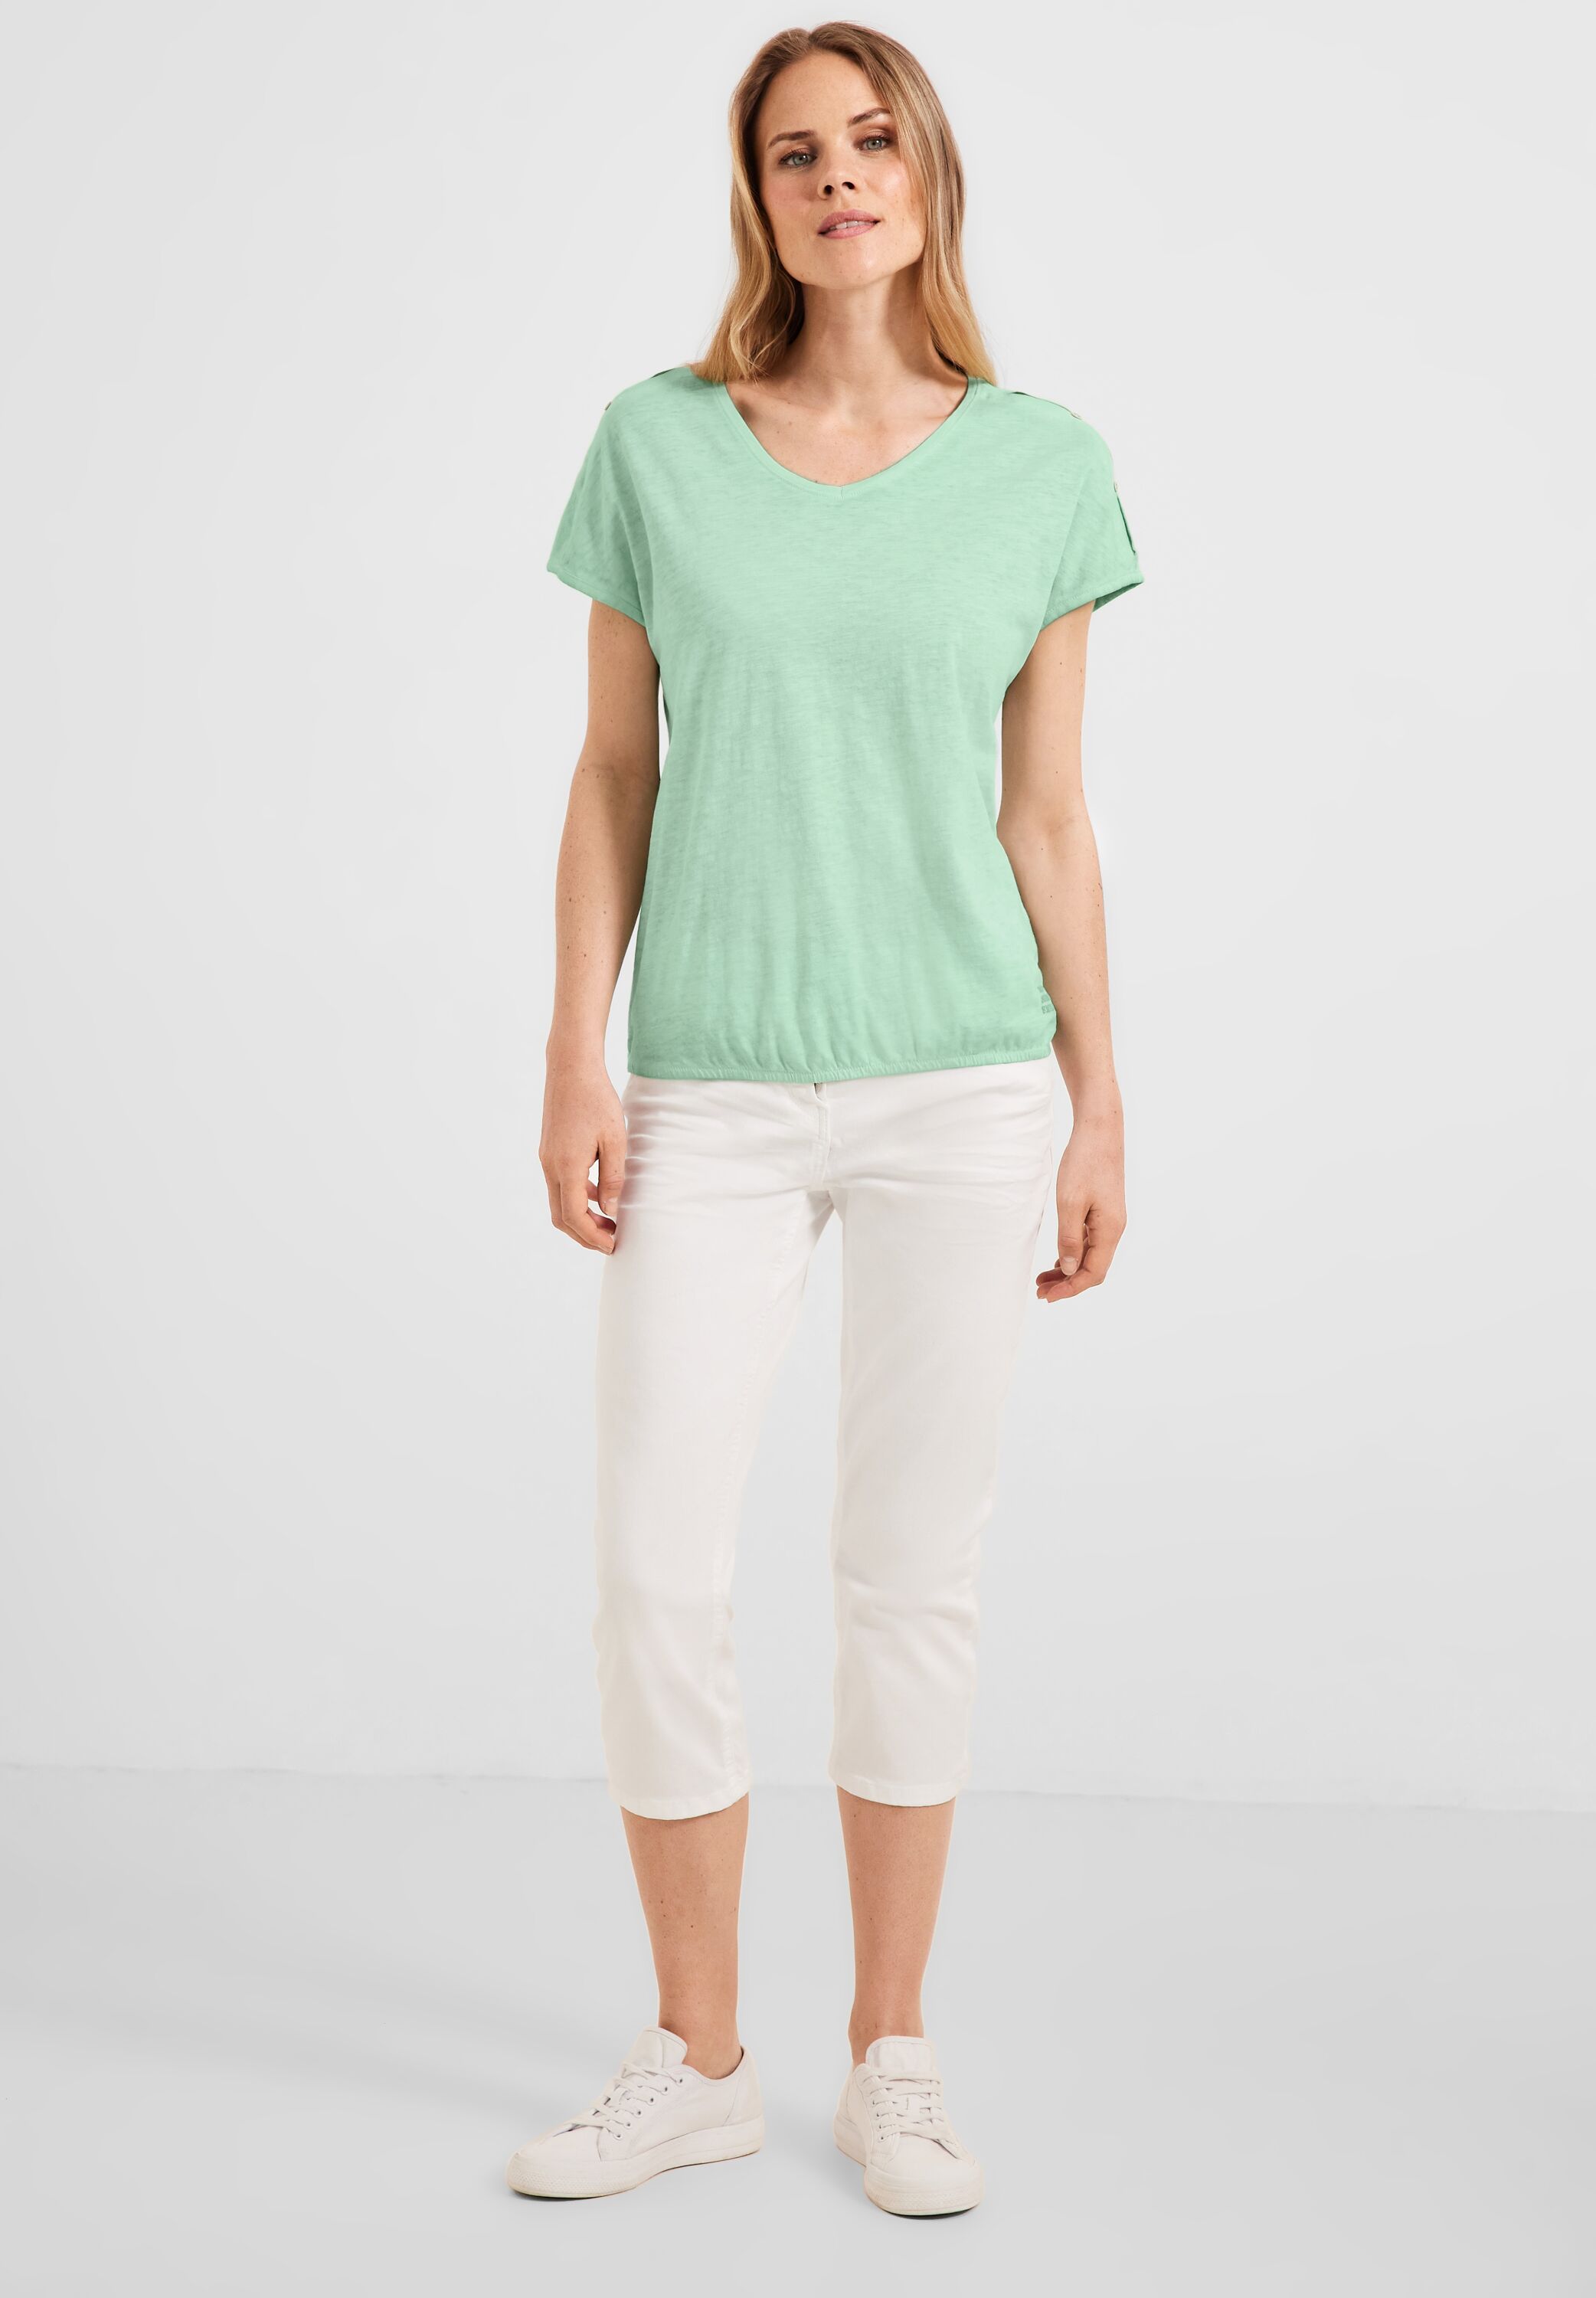 CECIL T-Shirt in Fresh Salvia Green im SALE reduziert B320028-14851 -  CONCEPT Mode